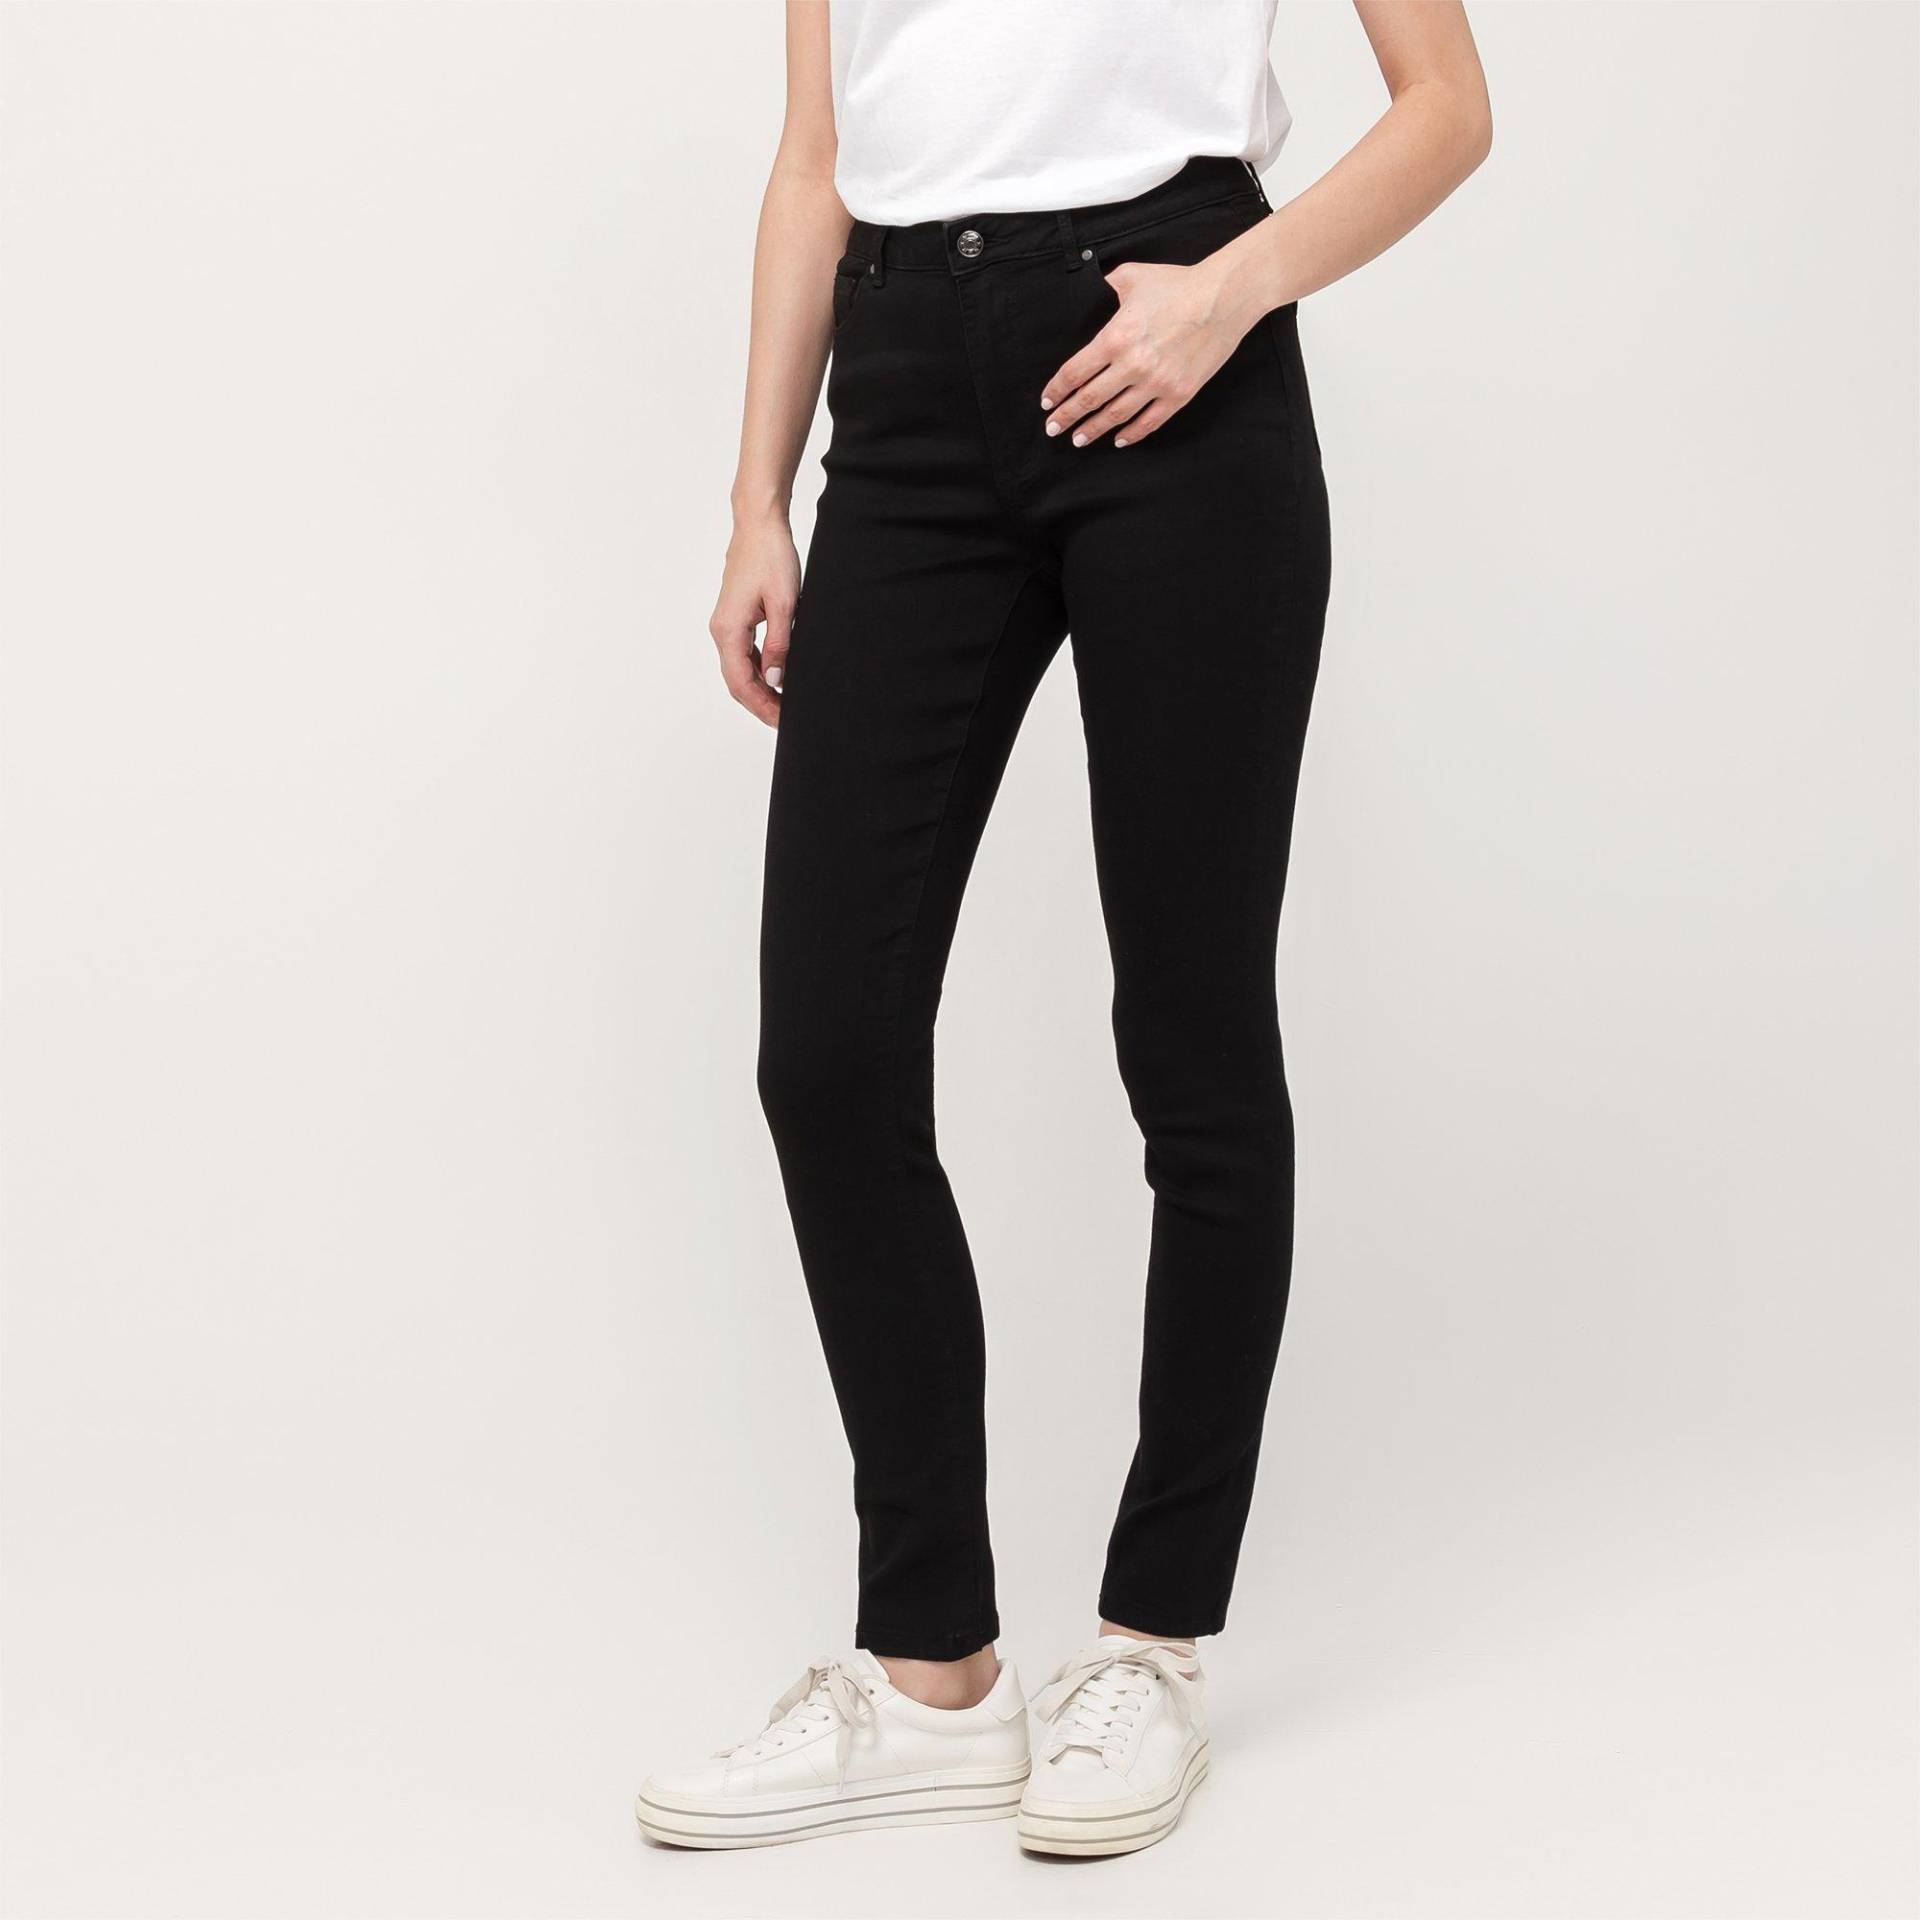 Jeans, Slim Fit Damen Black L30/W36 von Manor Woman